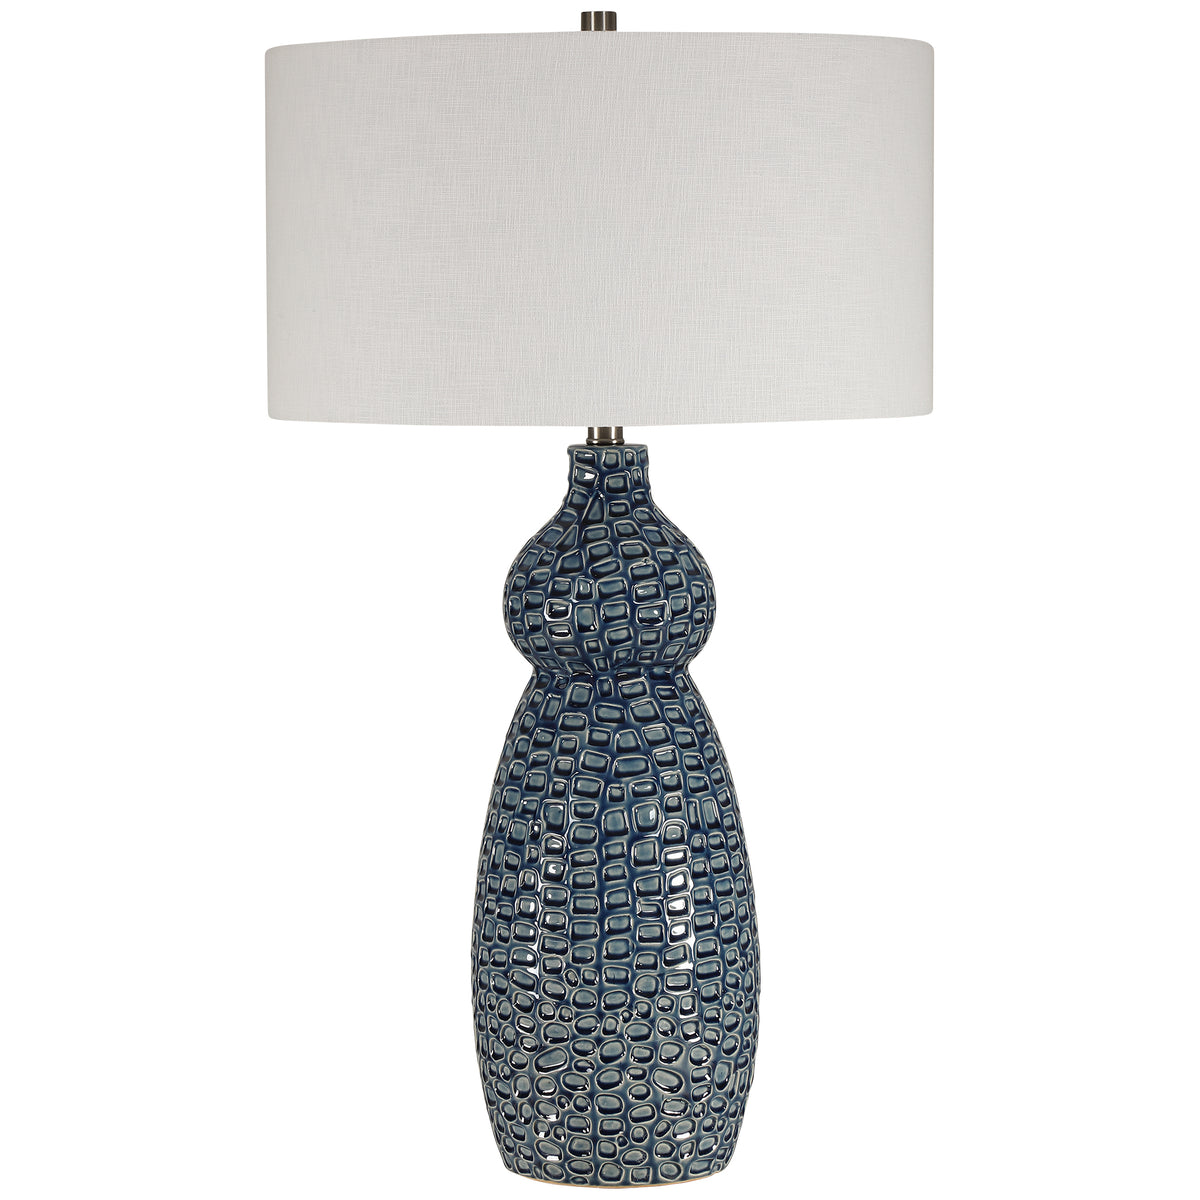 Holloway Cobalt Blue Table Lamp